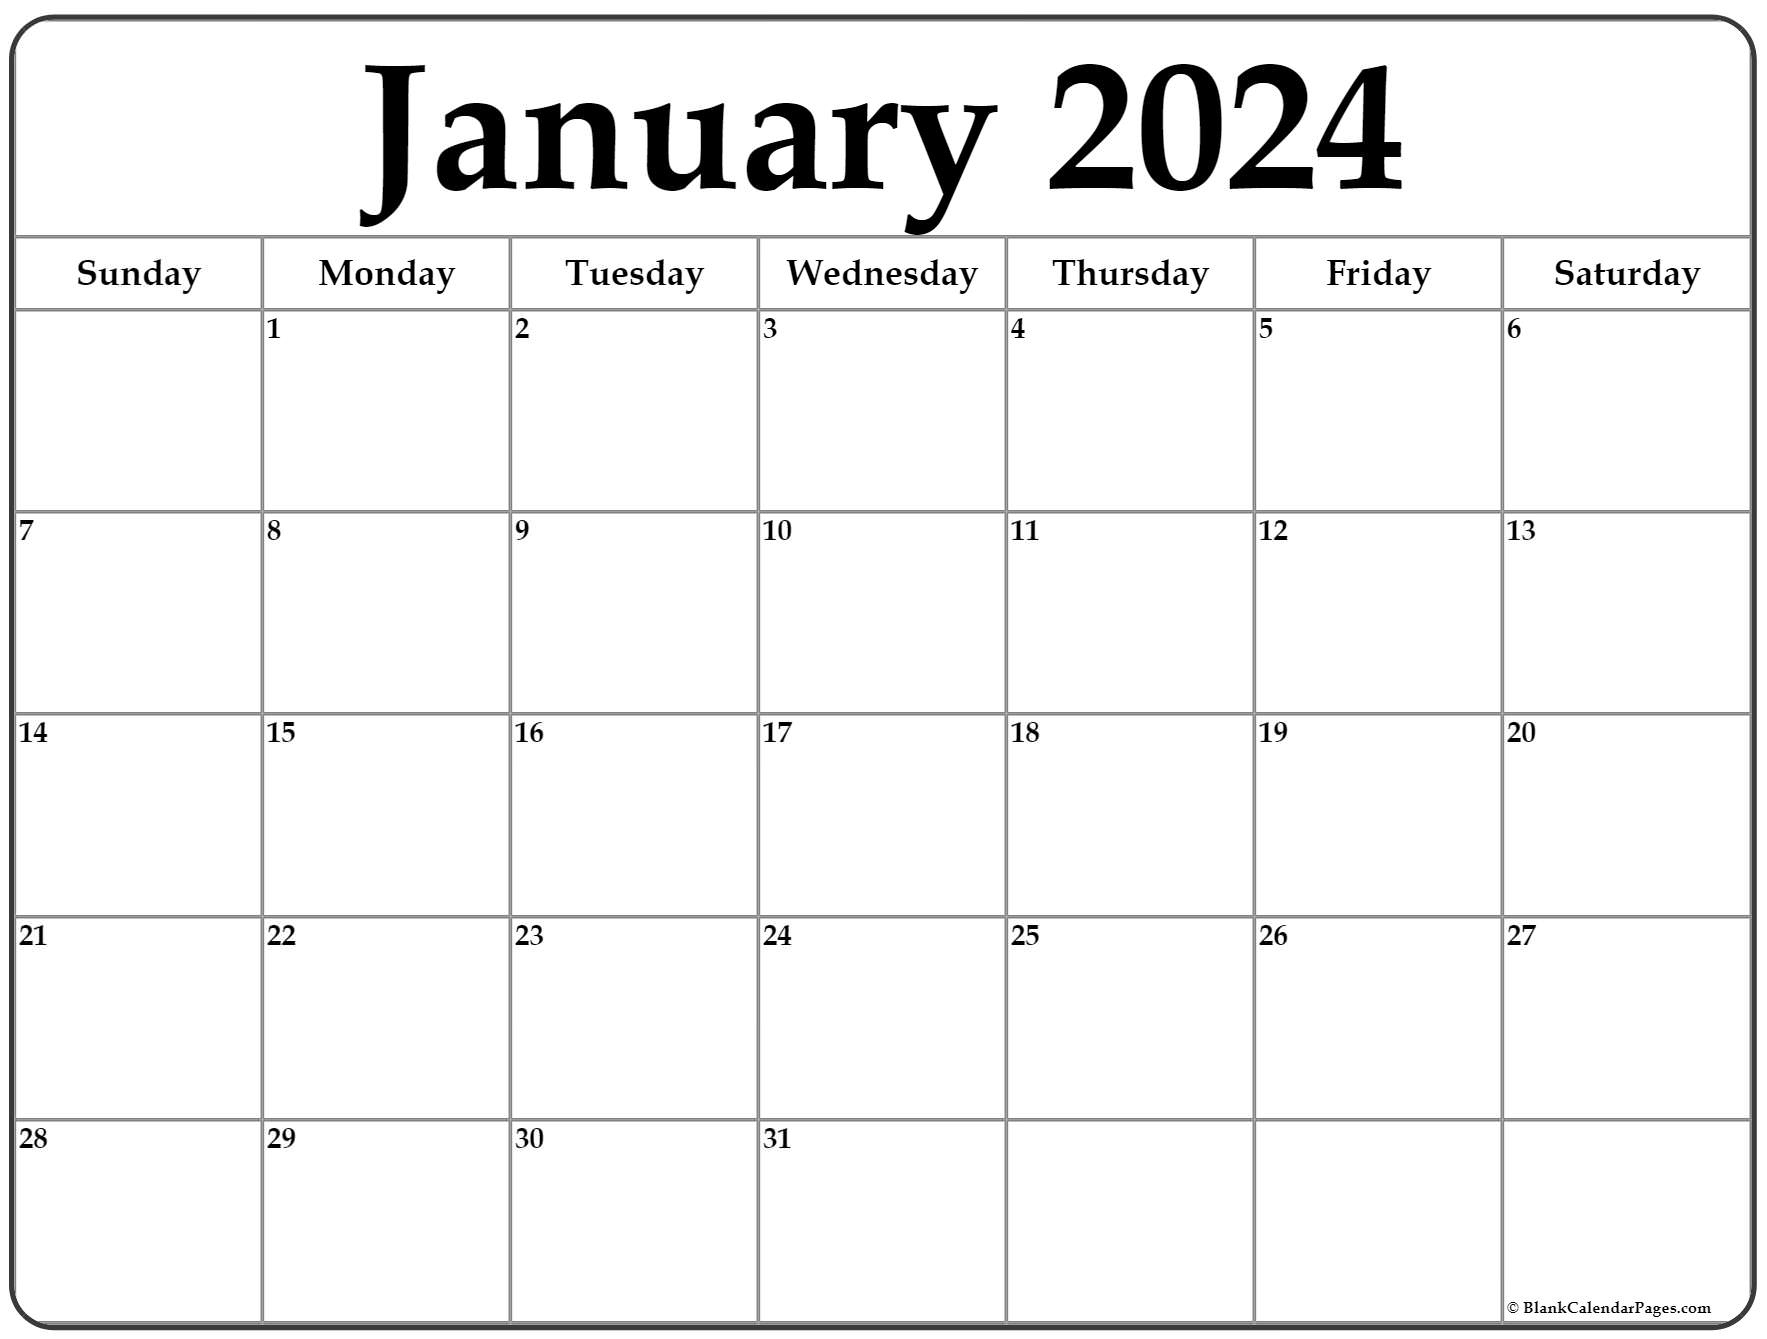 January 2024 Calendar | Free Printable Calendar | Printable Calendar Pages 2024 Free